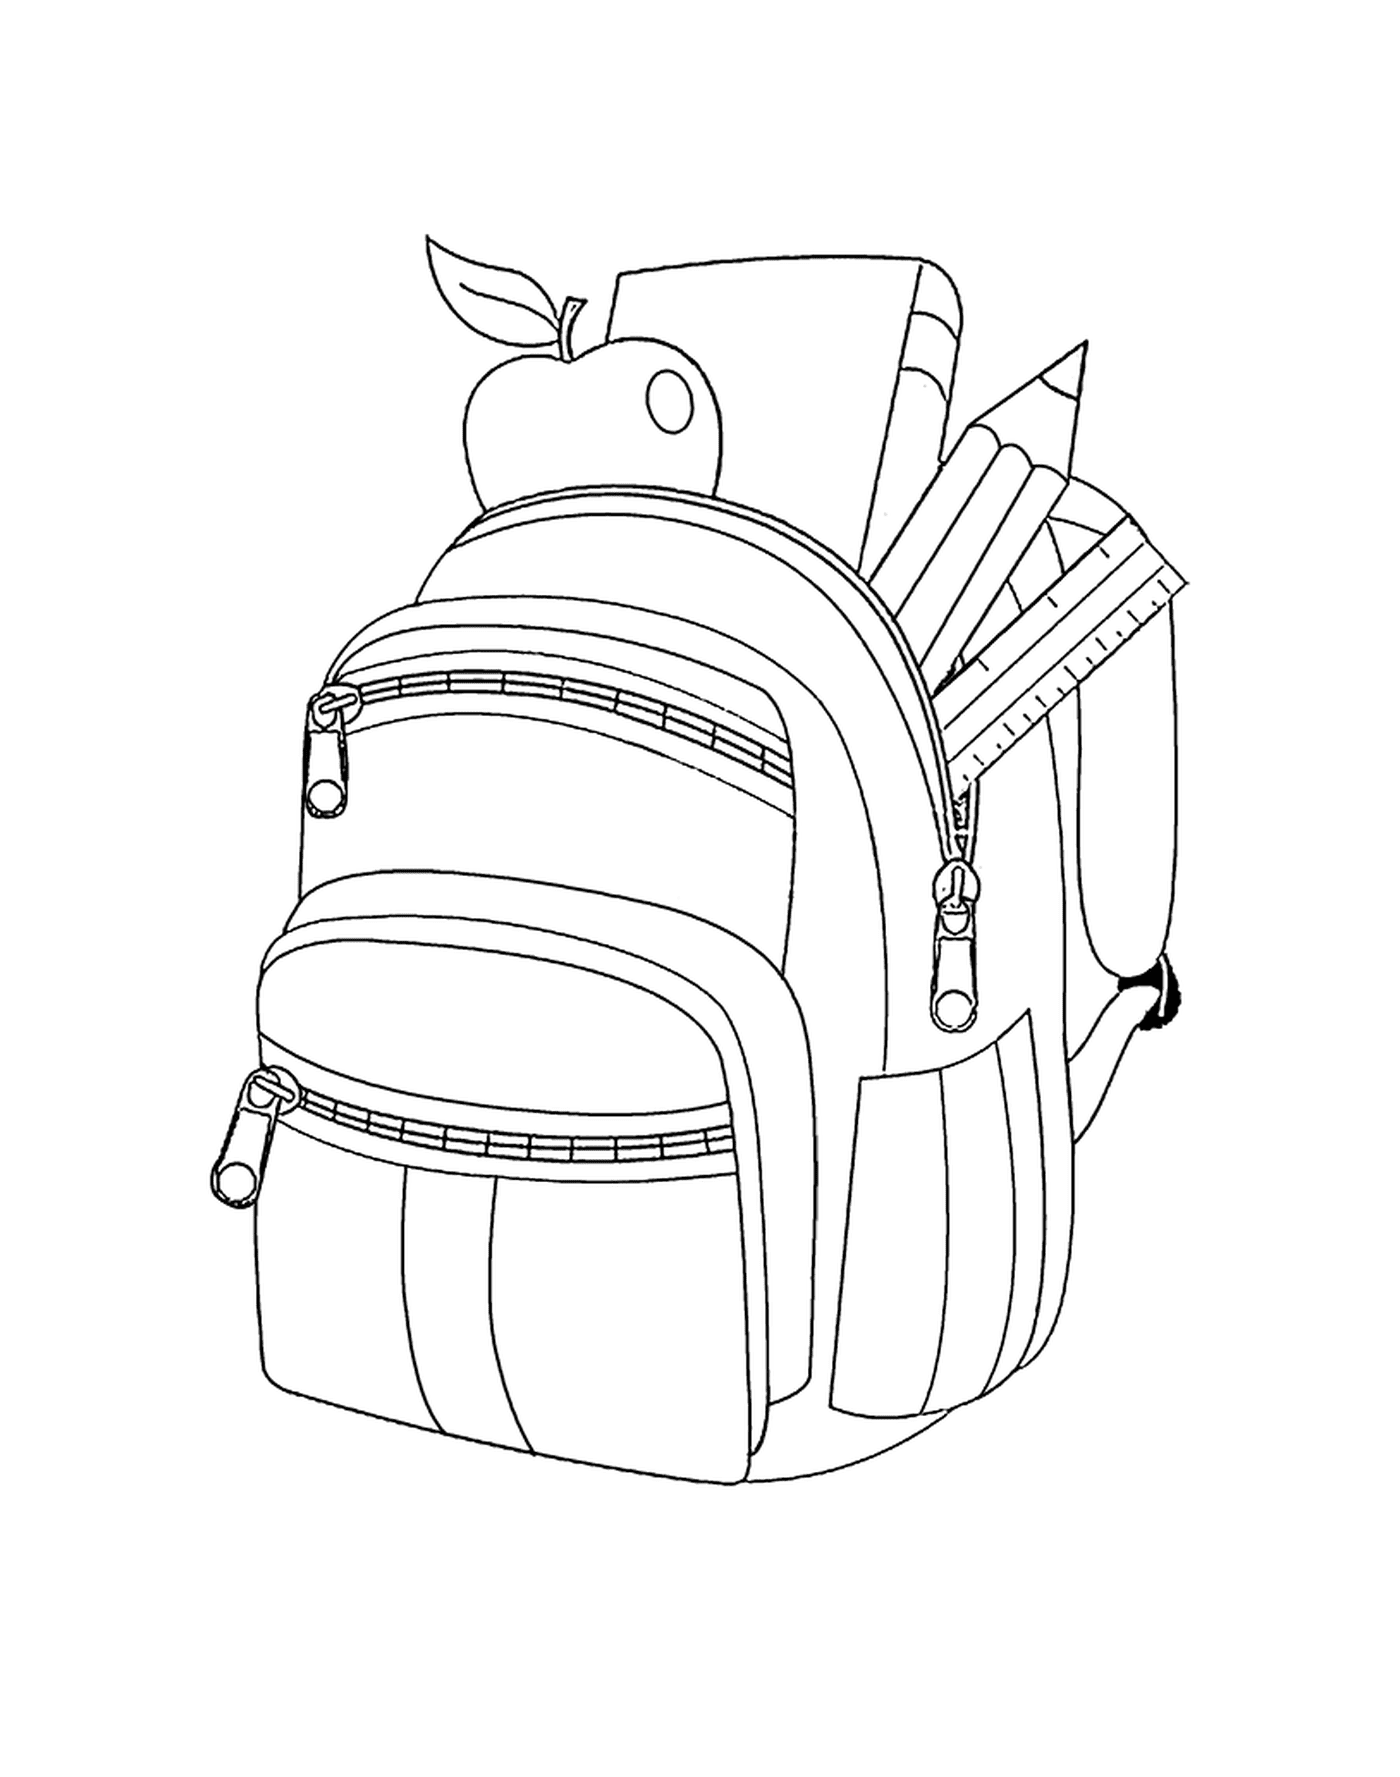  Рюкзак с карандашами и яблоком 